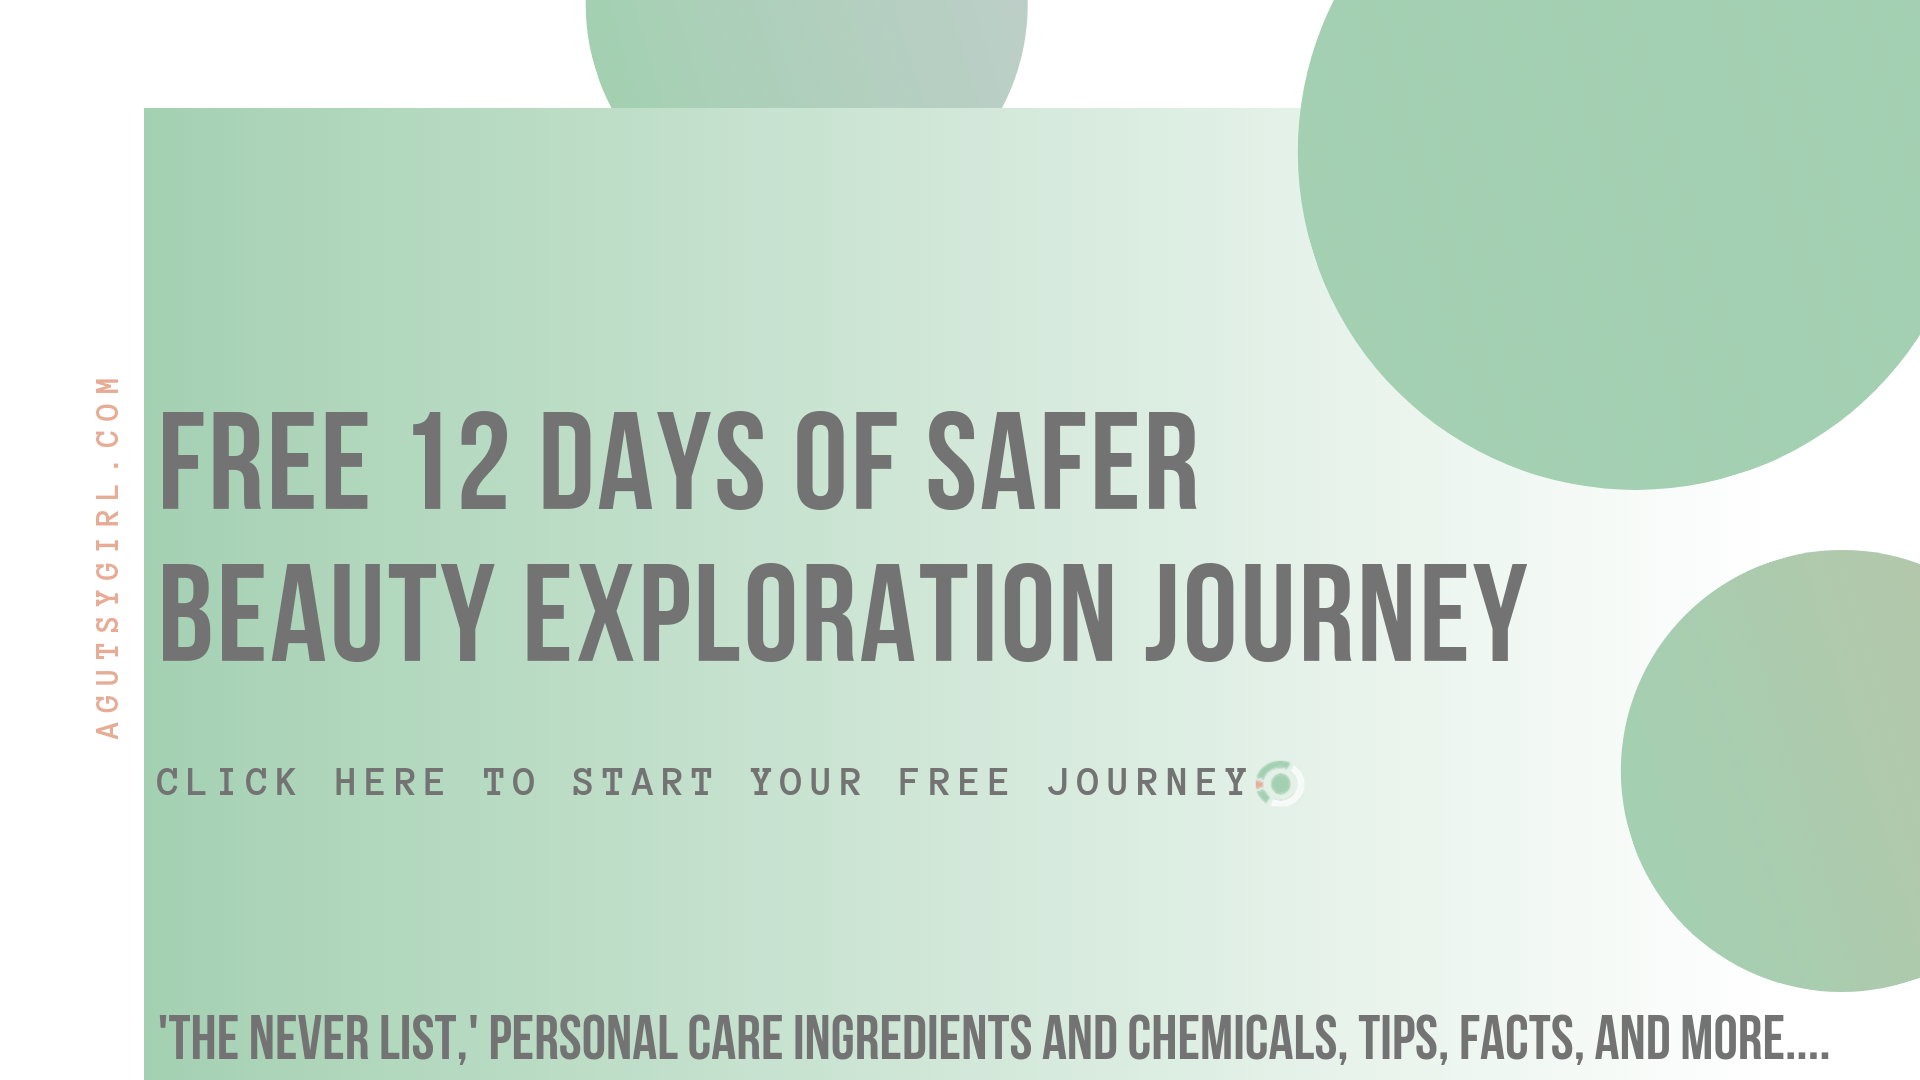 Free 12 Days of Safer Beauty Exploration Journey agutsygirl.com #skincare #acne #healthyliving #free